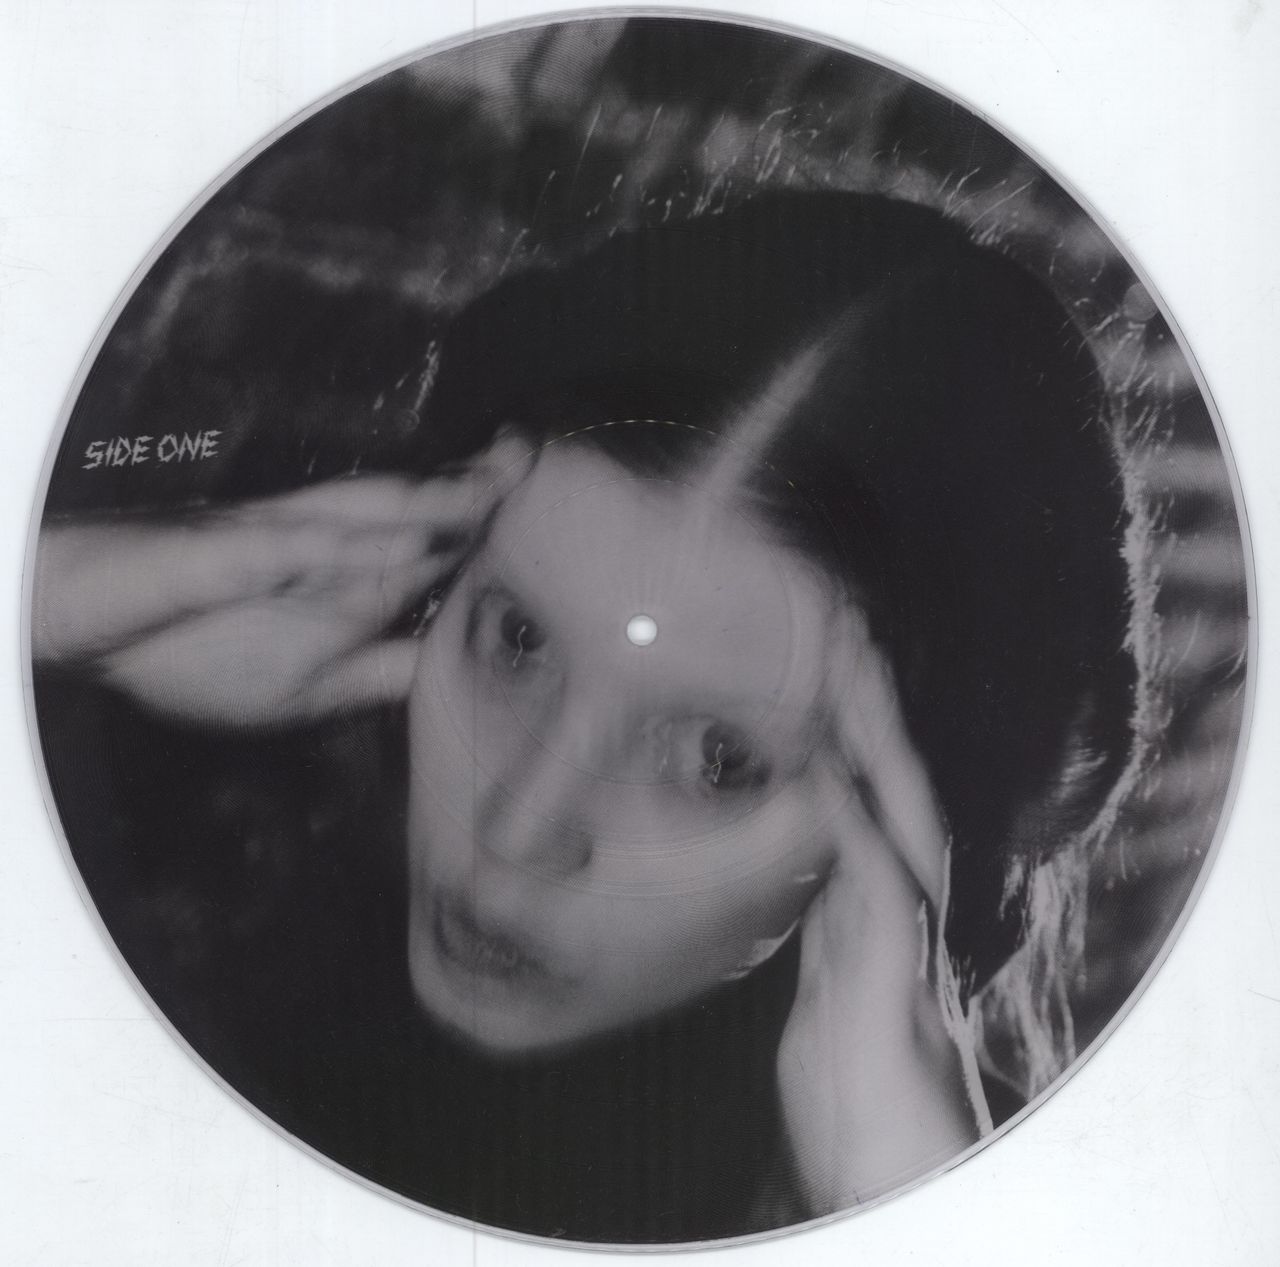 Lene Lovich Stateless - Stickered sleeve UK picture disc LP (vinyl picture disc album)